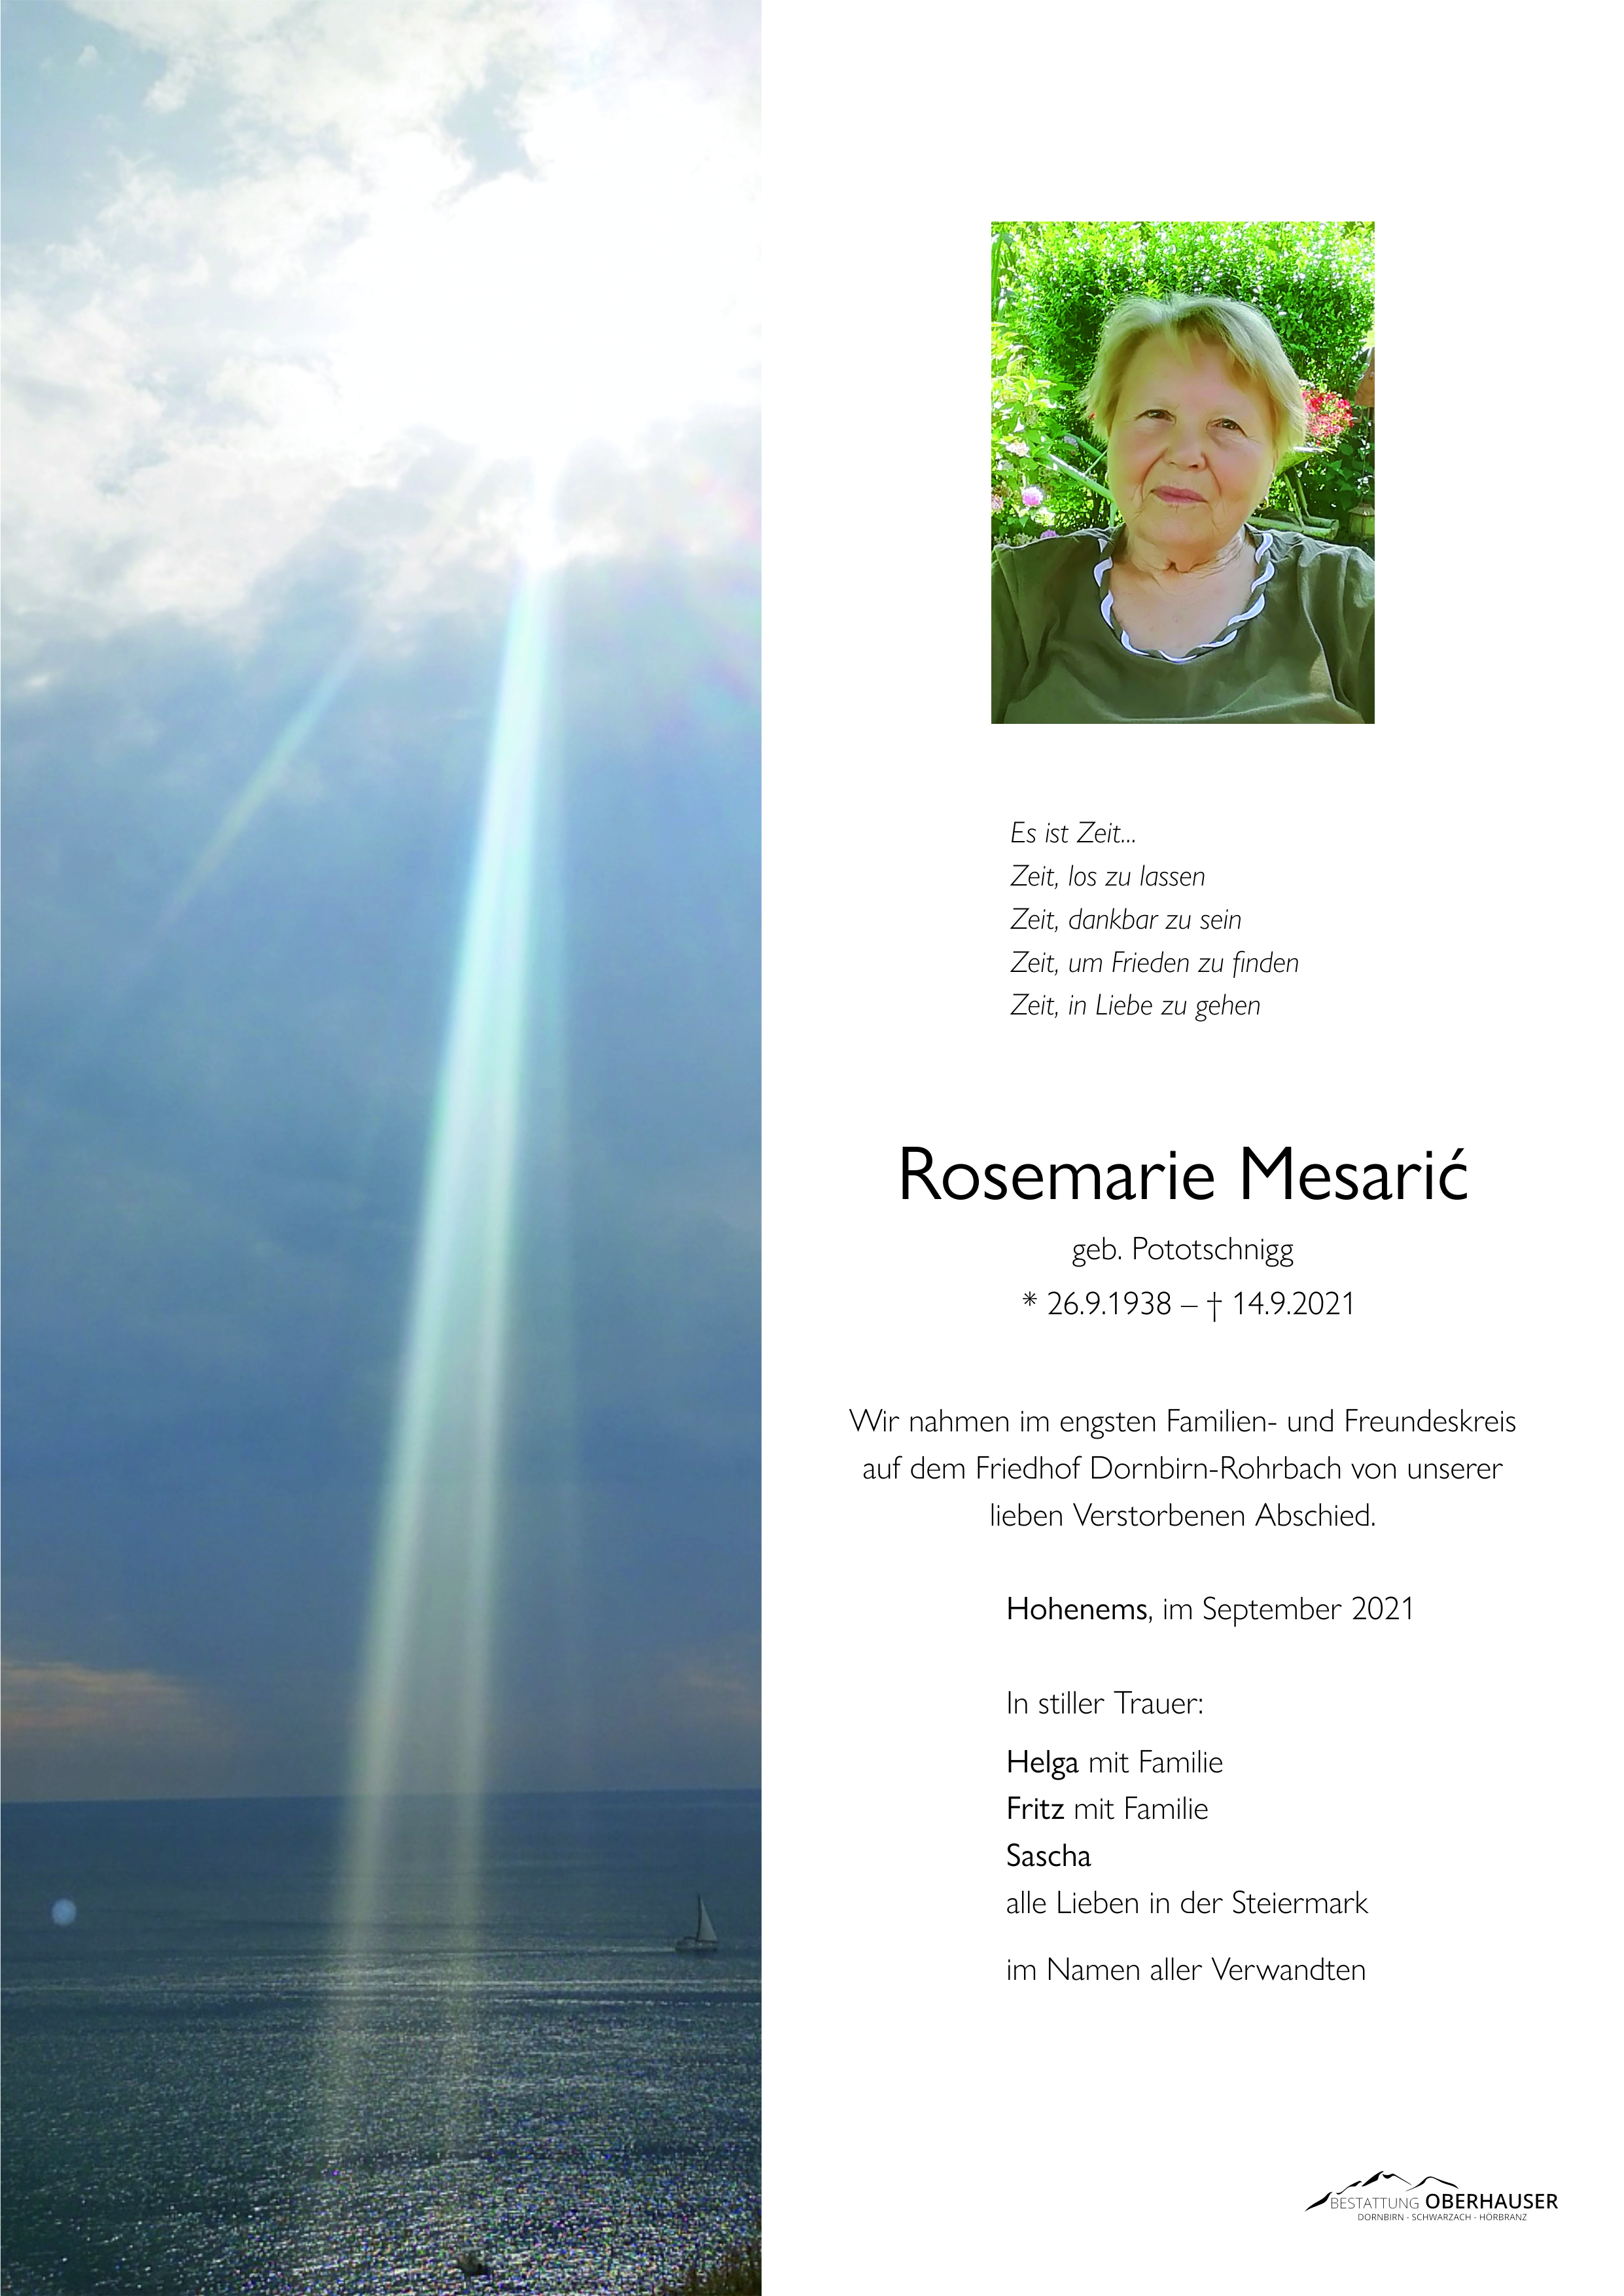 Rosemarie Mesarić